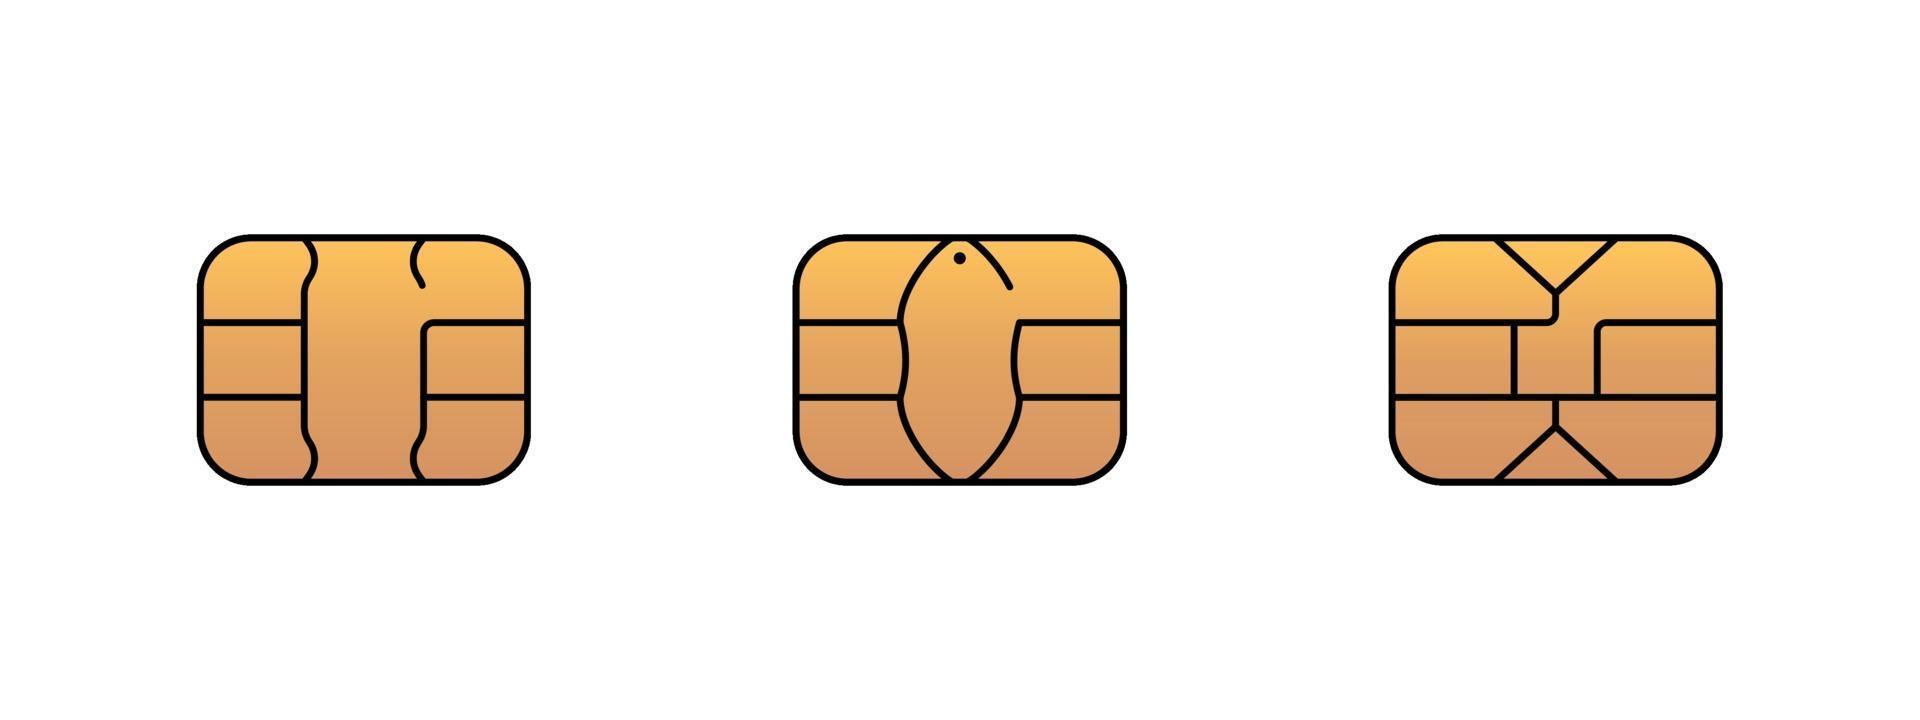 EMV Gold Chip Symbol für Bank Kunststoff Kredit- oder Debitkarte. Vektorsymbol-Illustrationssatz vektor